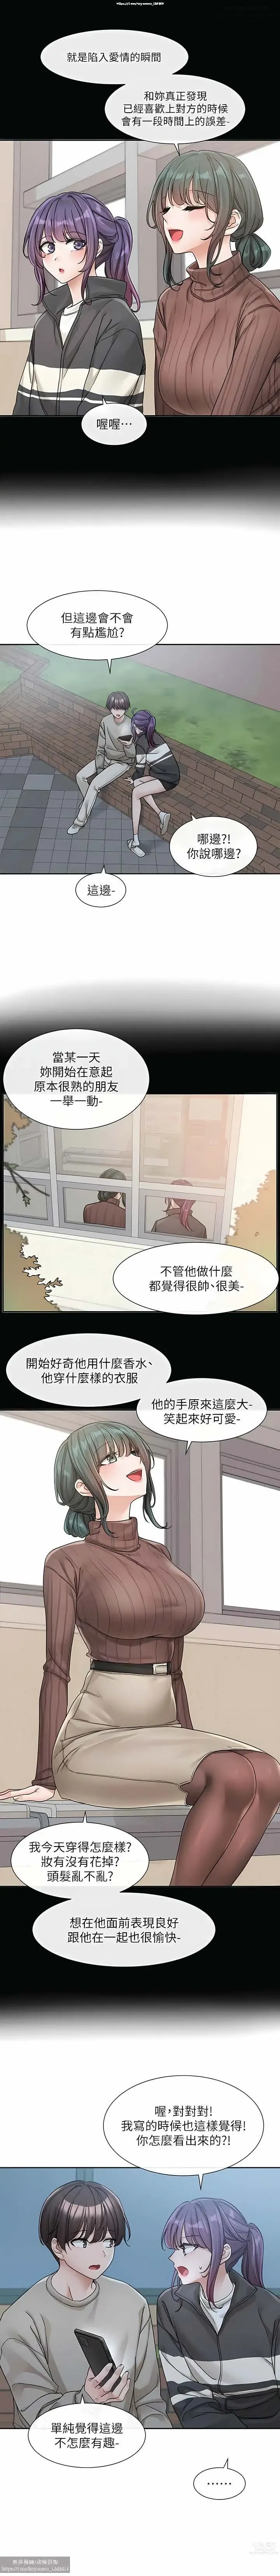 Page 7 of manga 社團學姊 127-137 官方中文 社团学姐